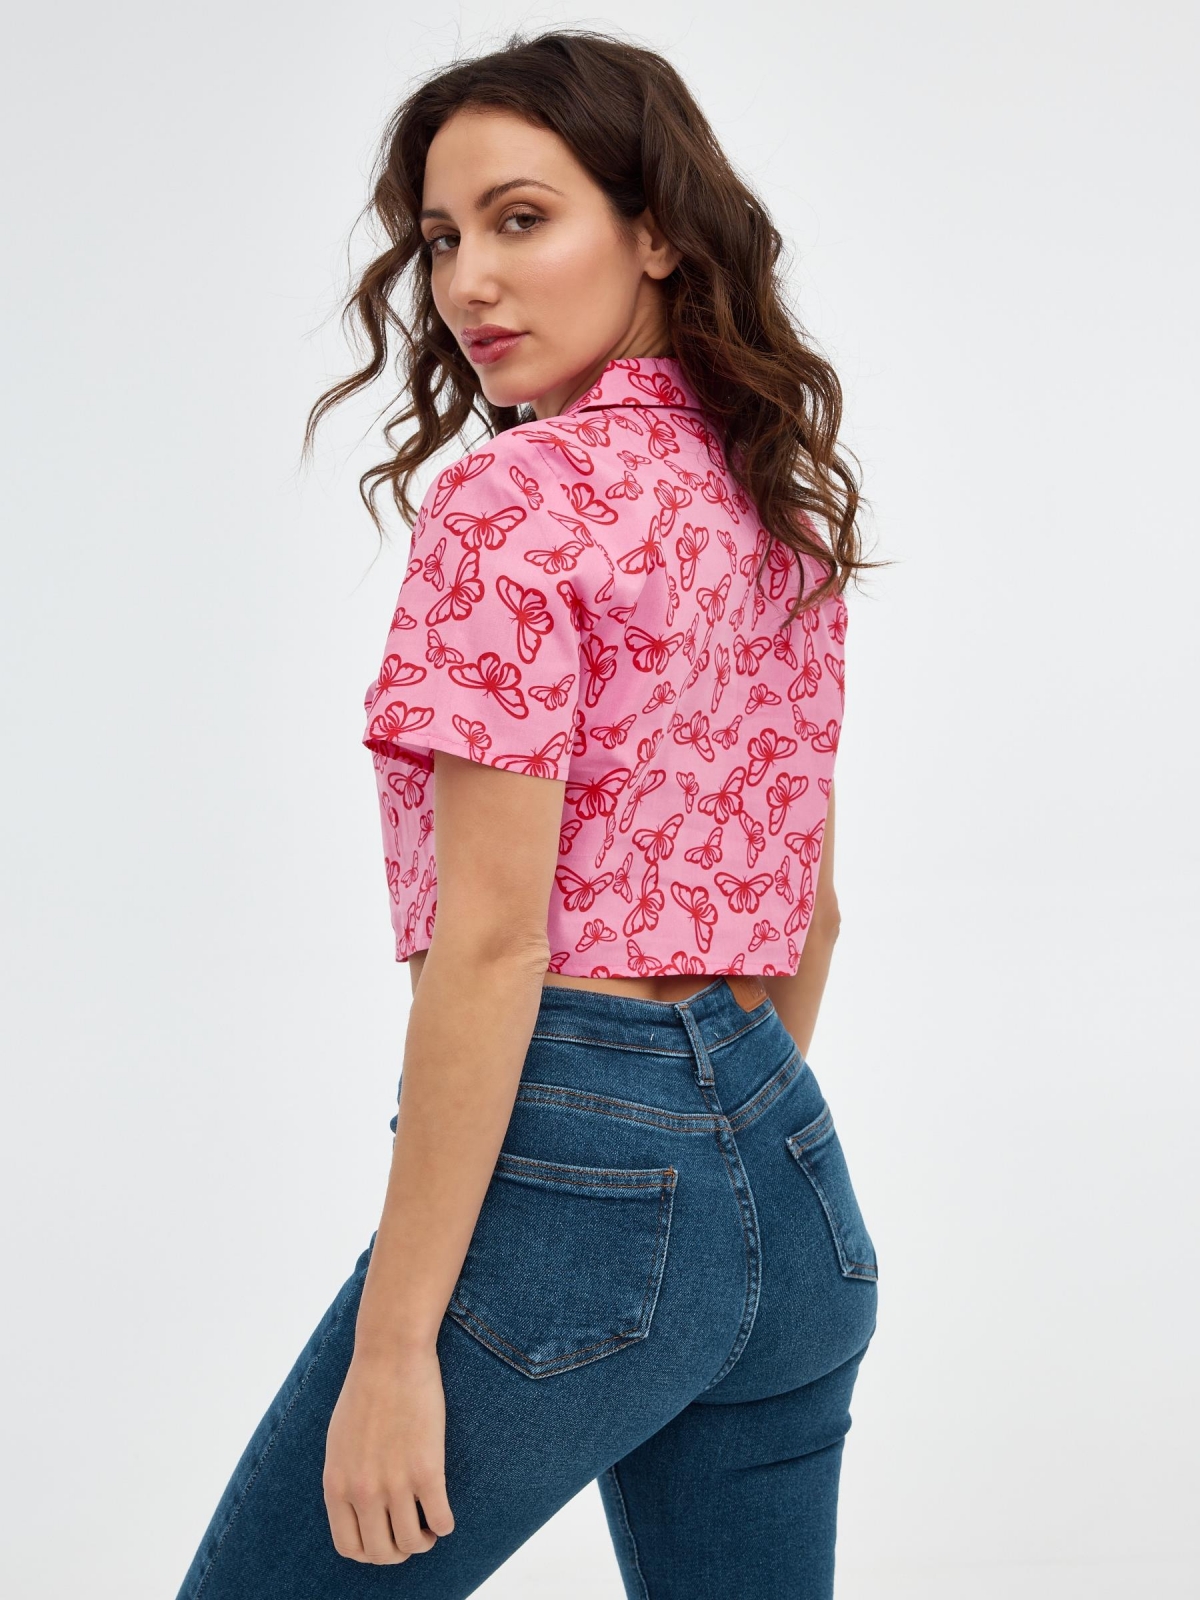 Printed crop shirt bubblegum pink middle back view